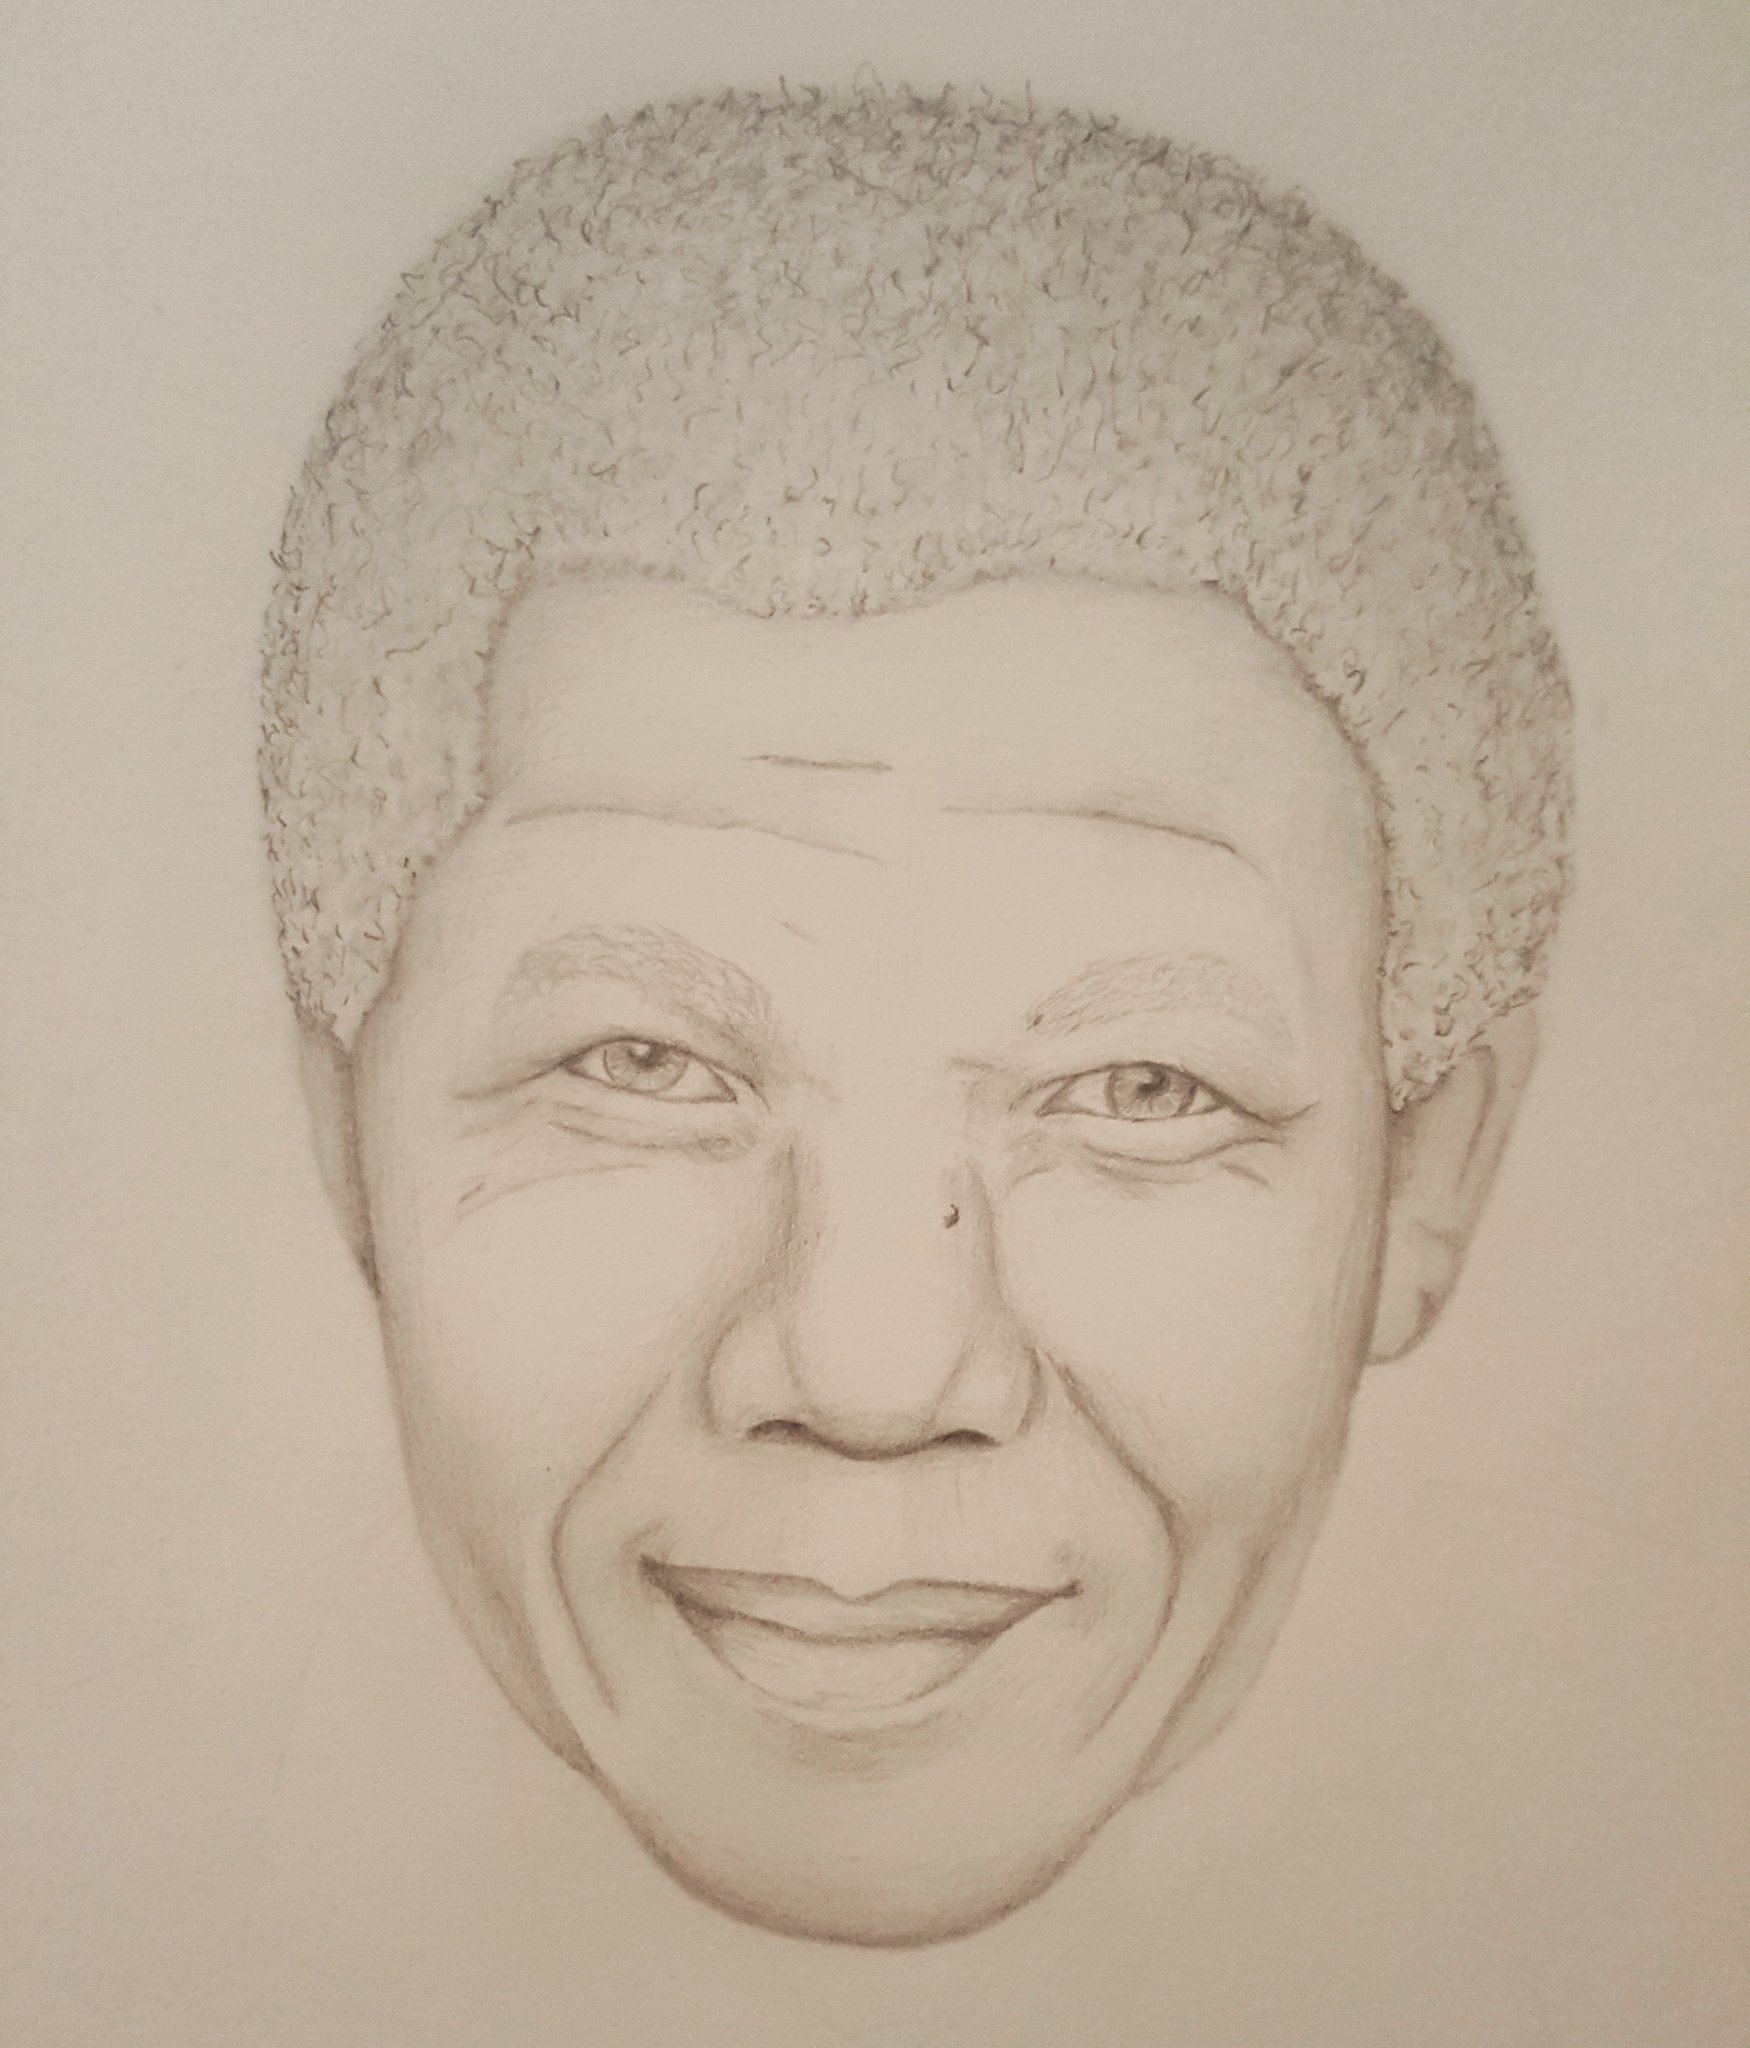 Ben Heine Art and Music Blog: Tribute to Nelson Mandela